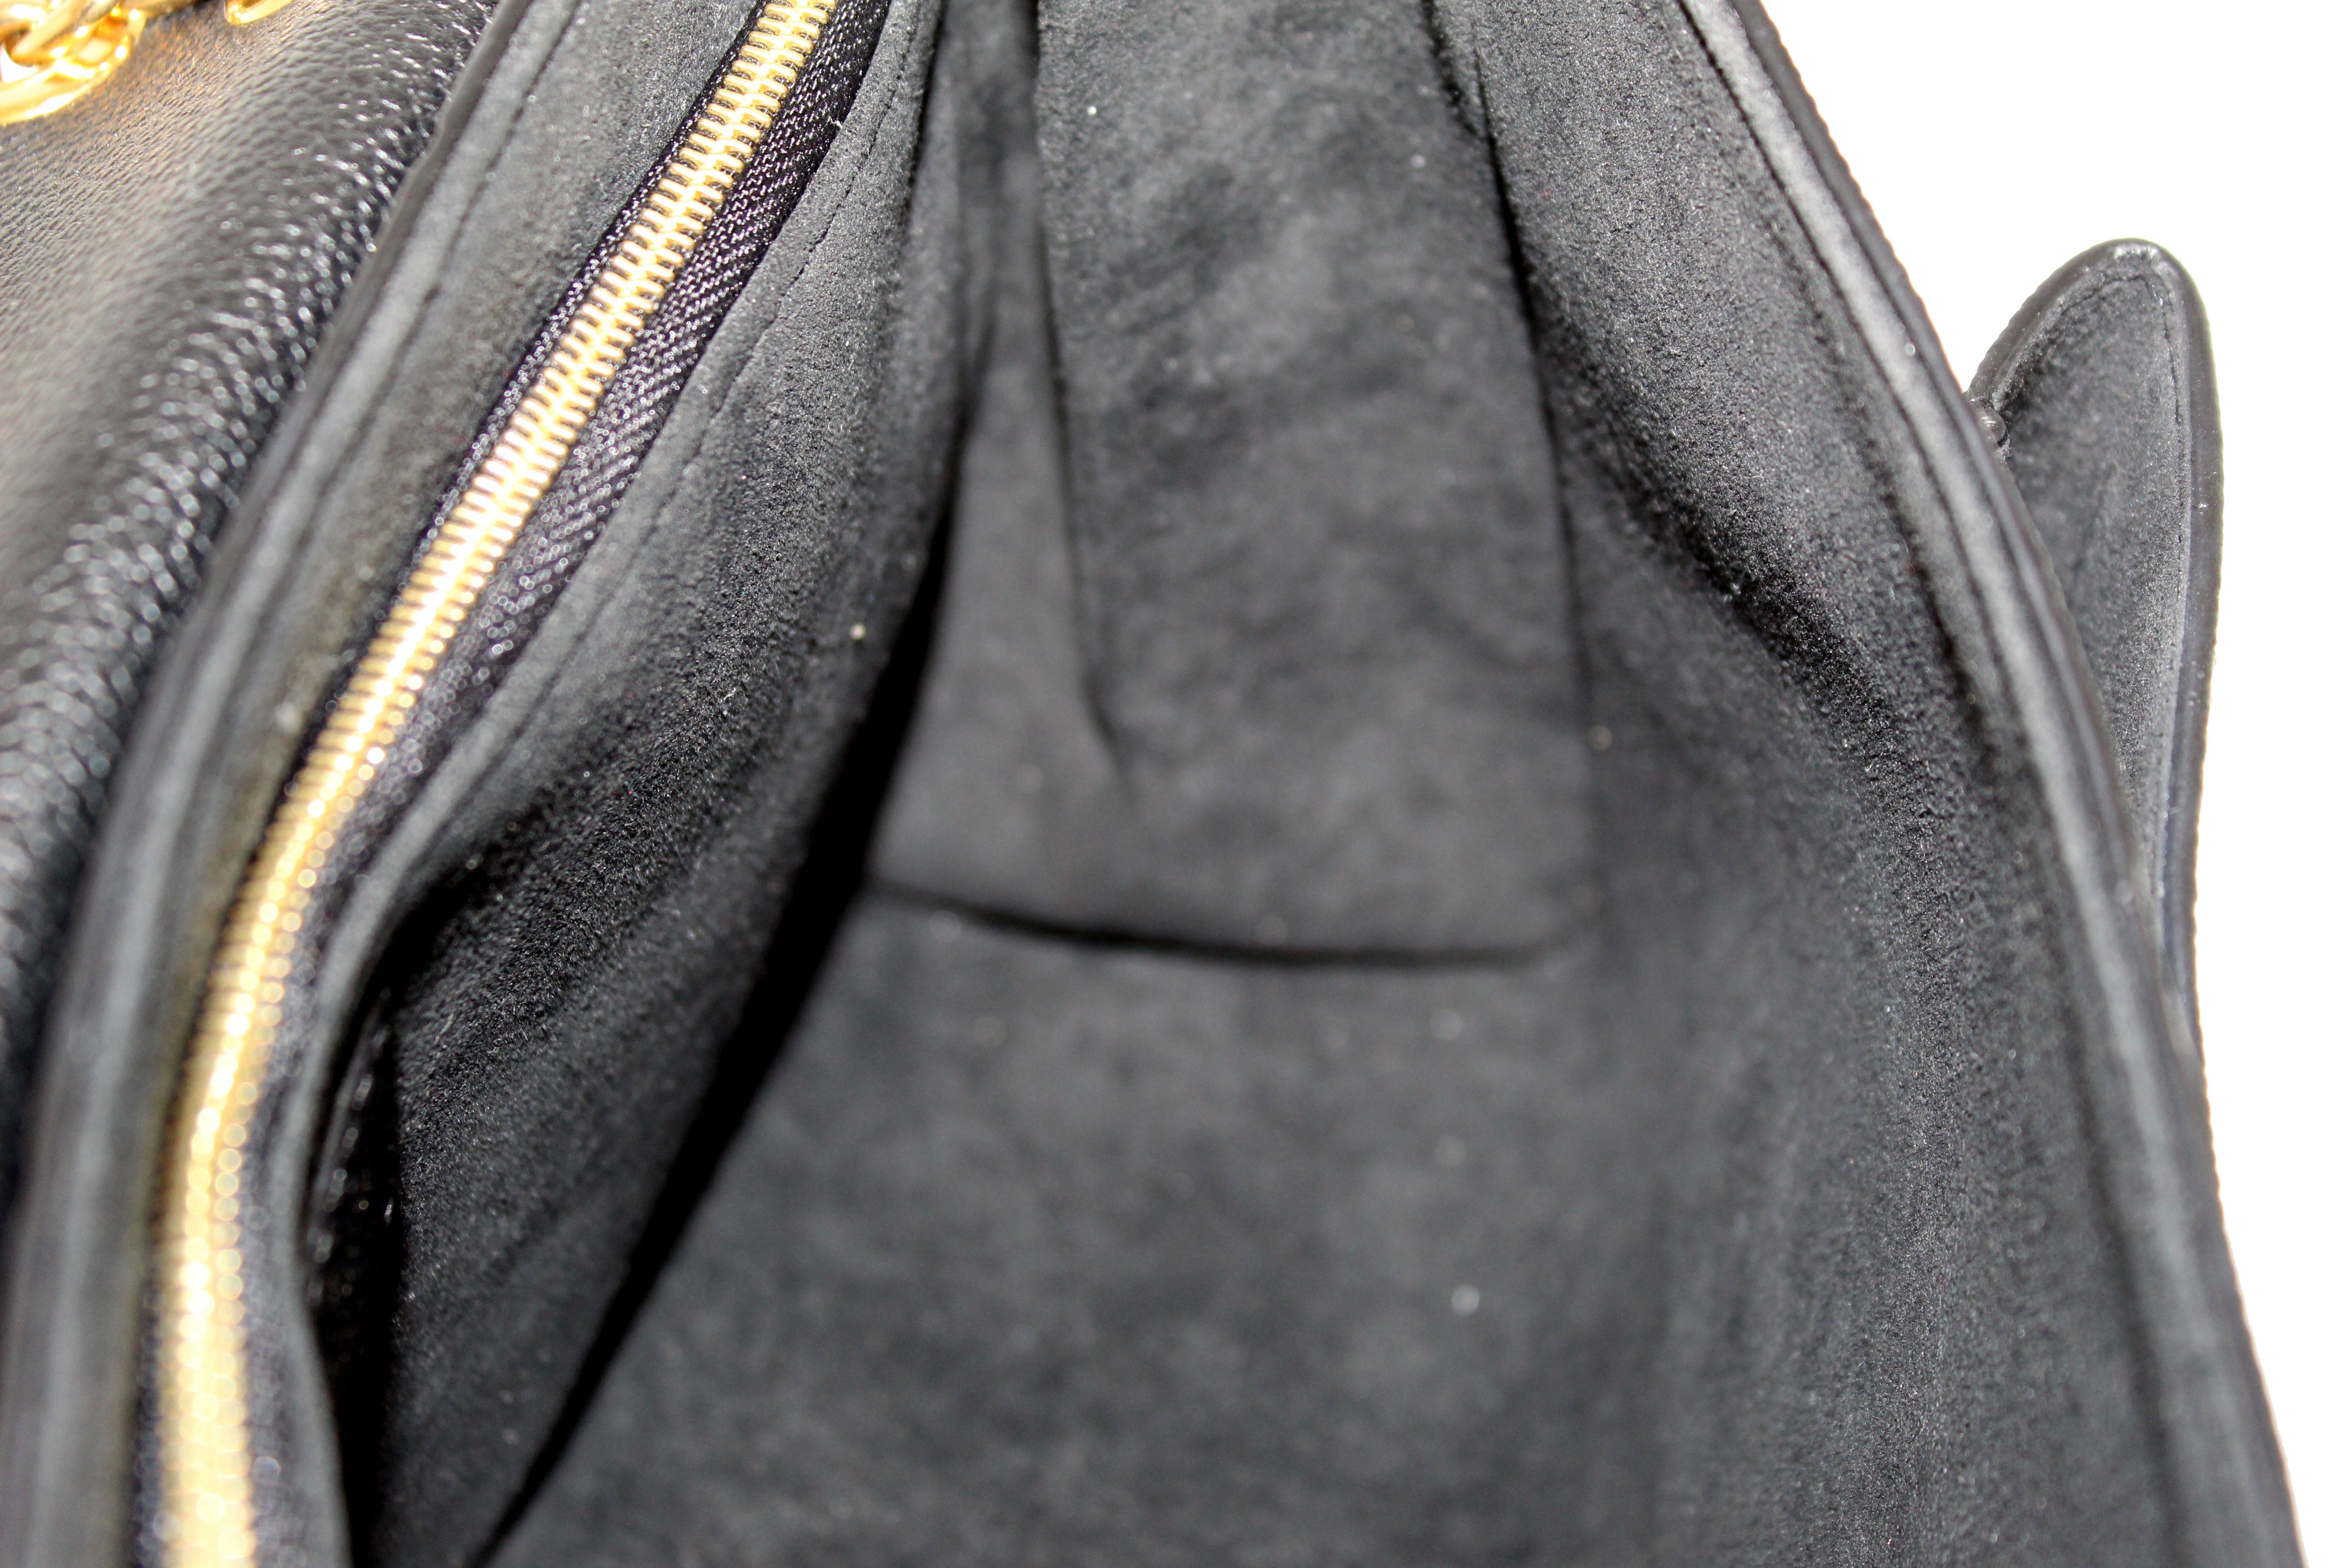 The $2,230 @louisvuitton Vavin bag - Fashion Bomb Daily